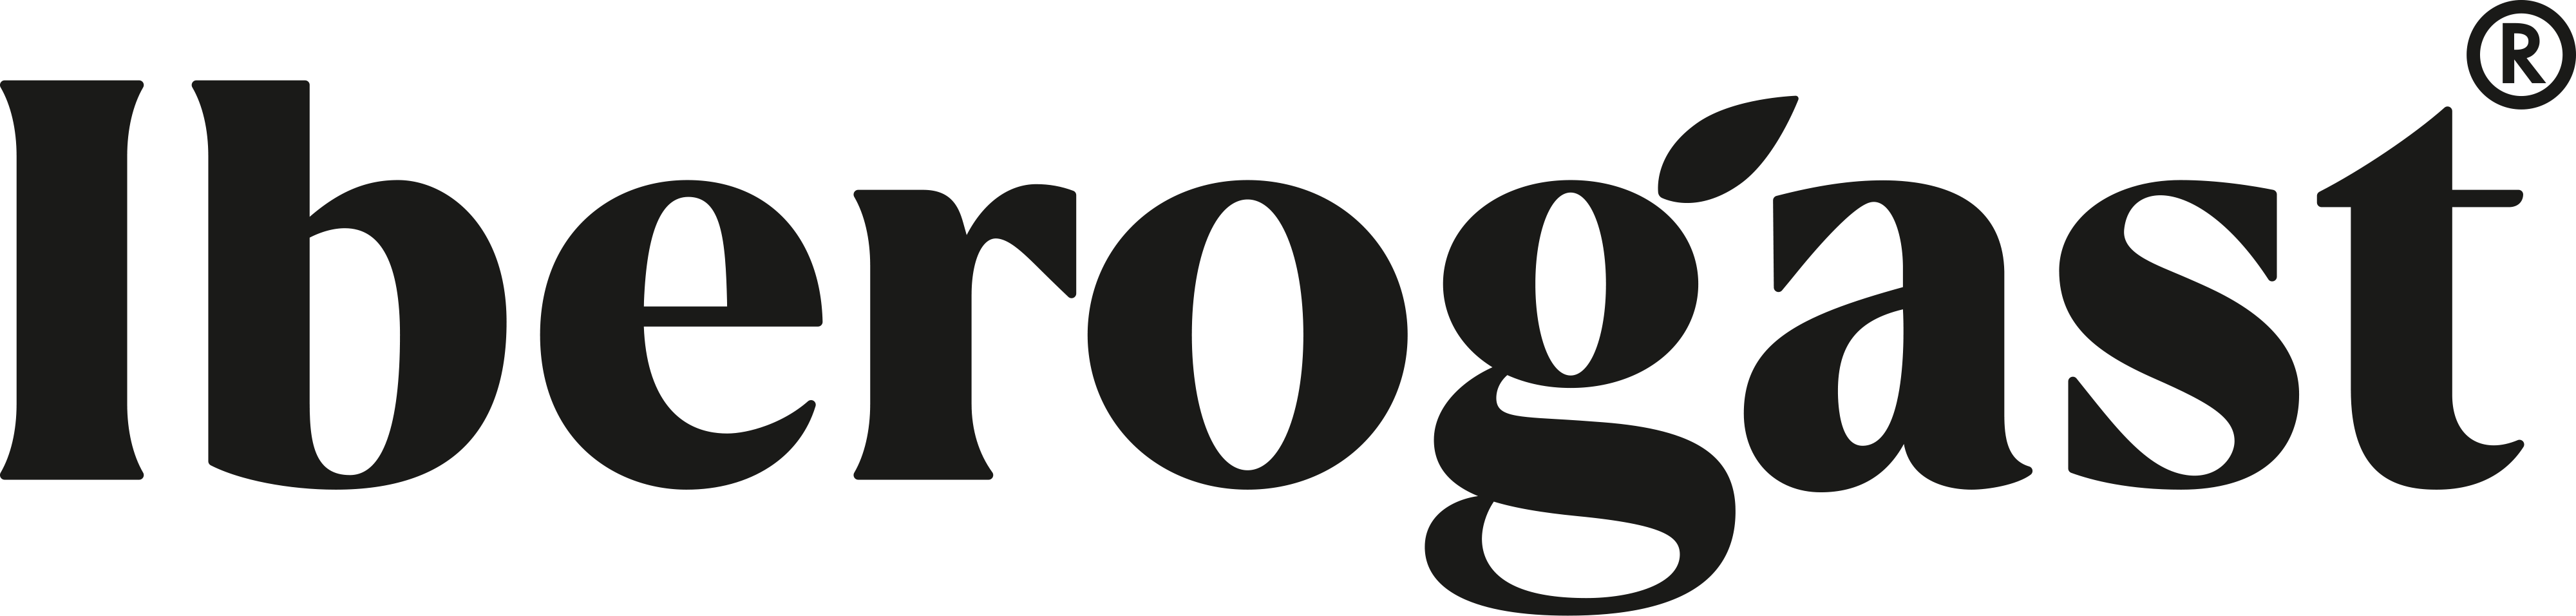 Iberogast logo